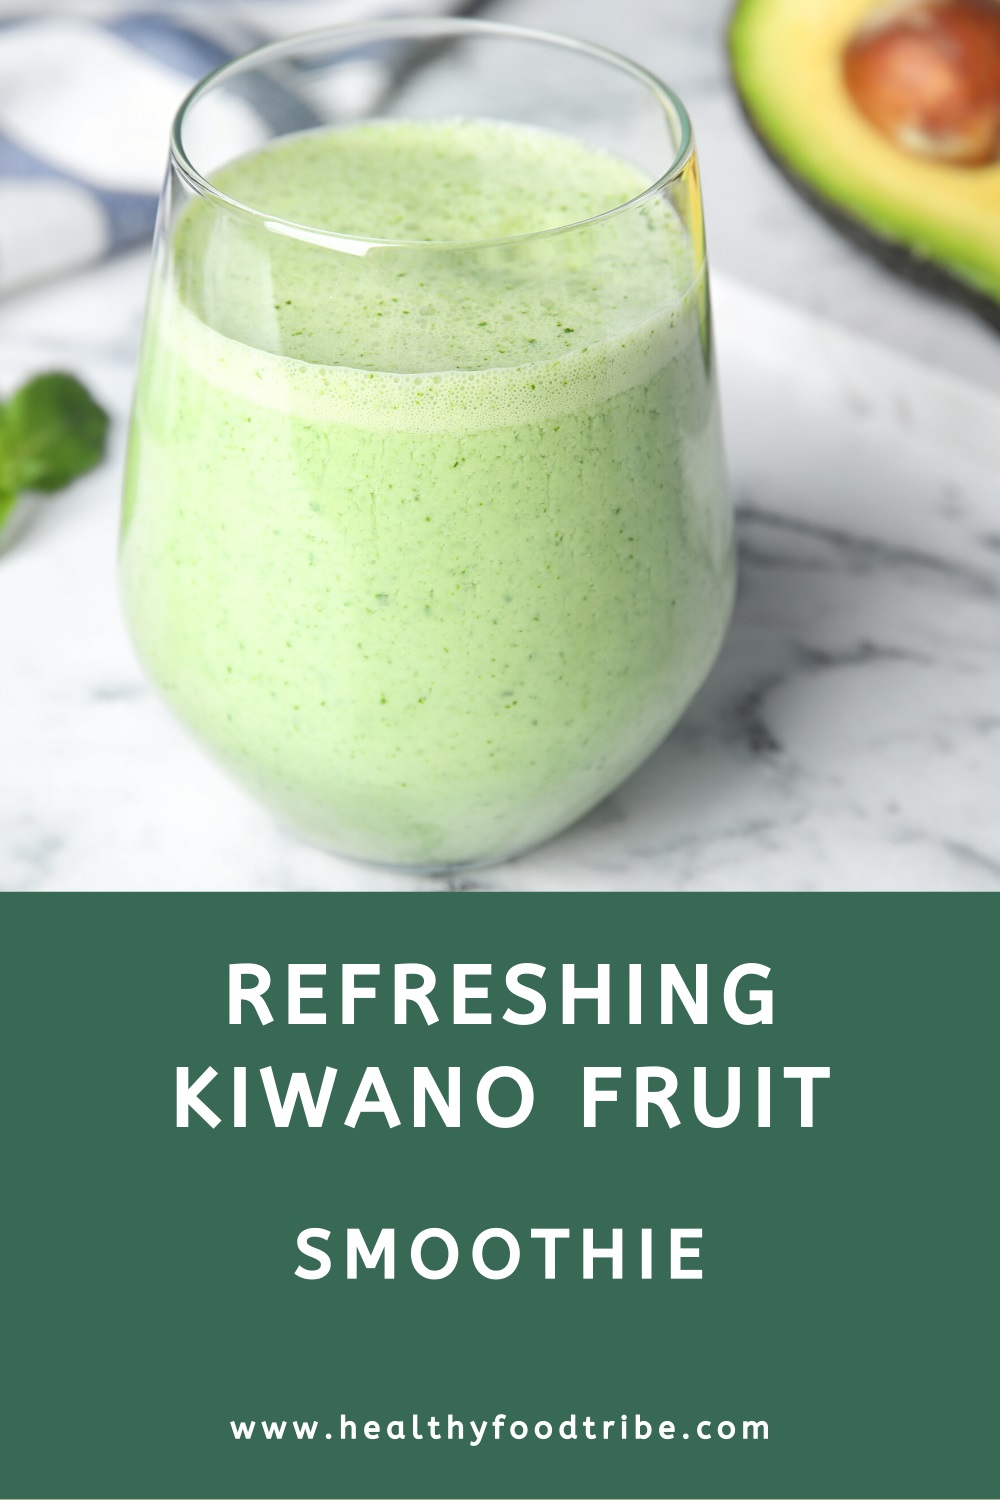 Refreshing kiwano fruit smoothie recipe